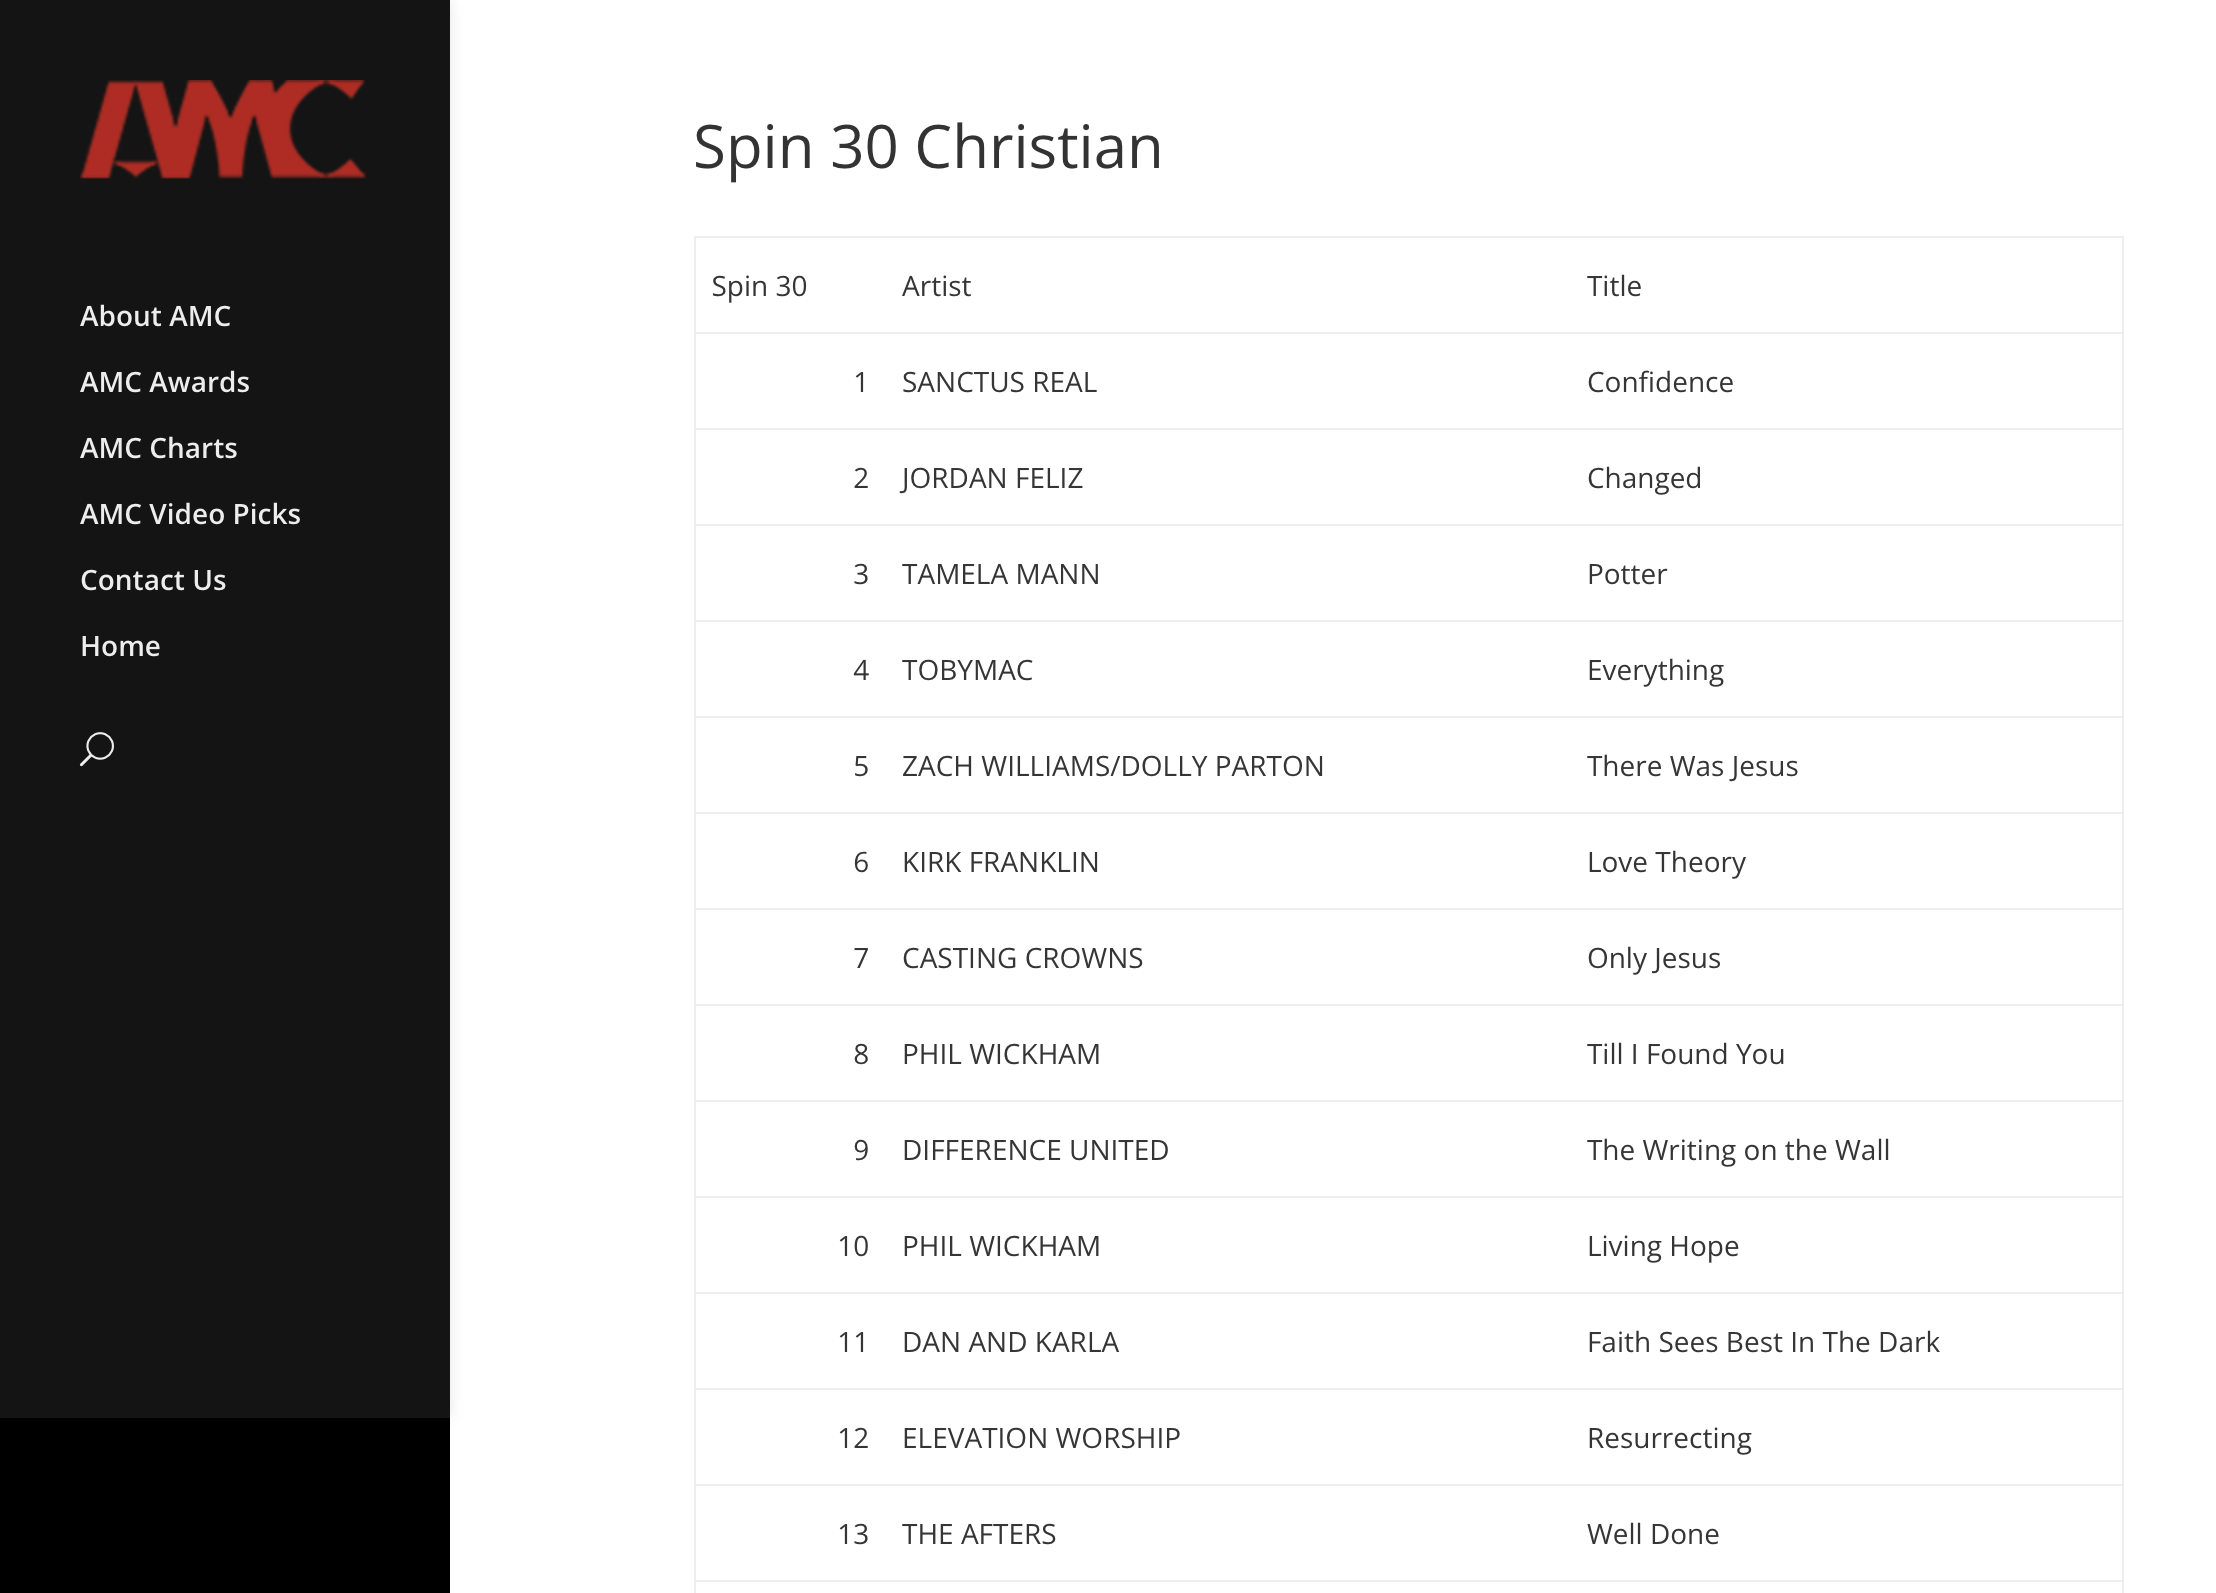 AMC Spin 30 Christian List